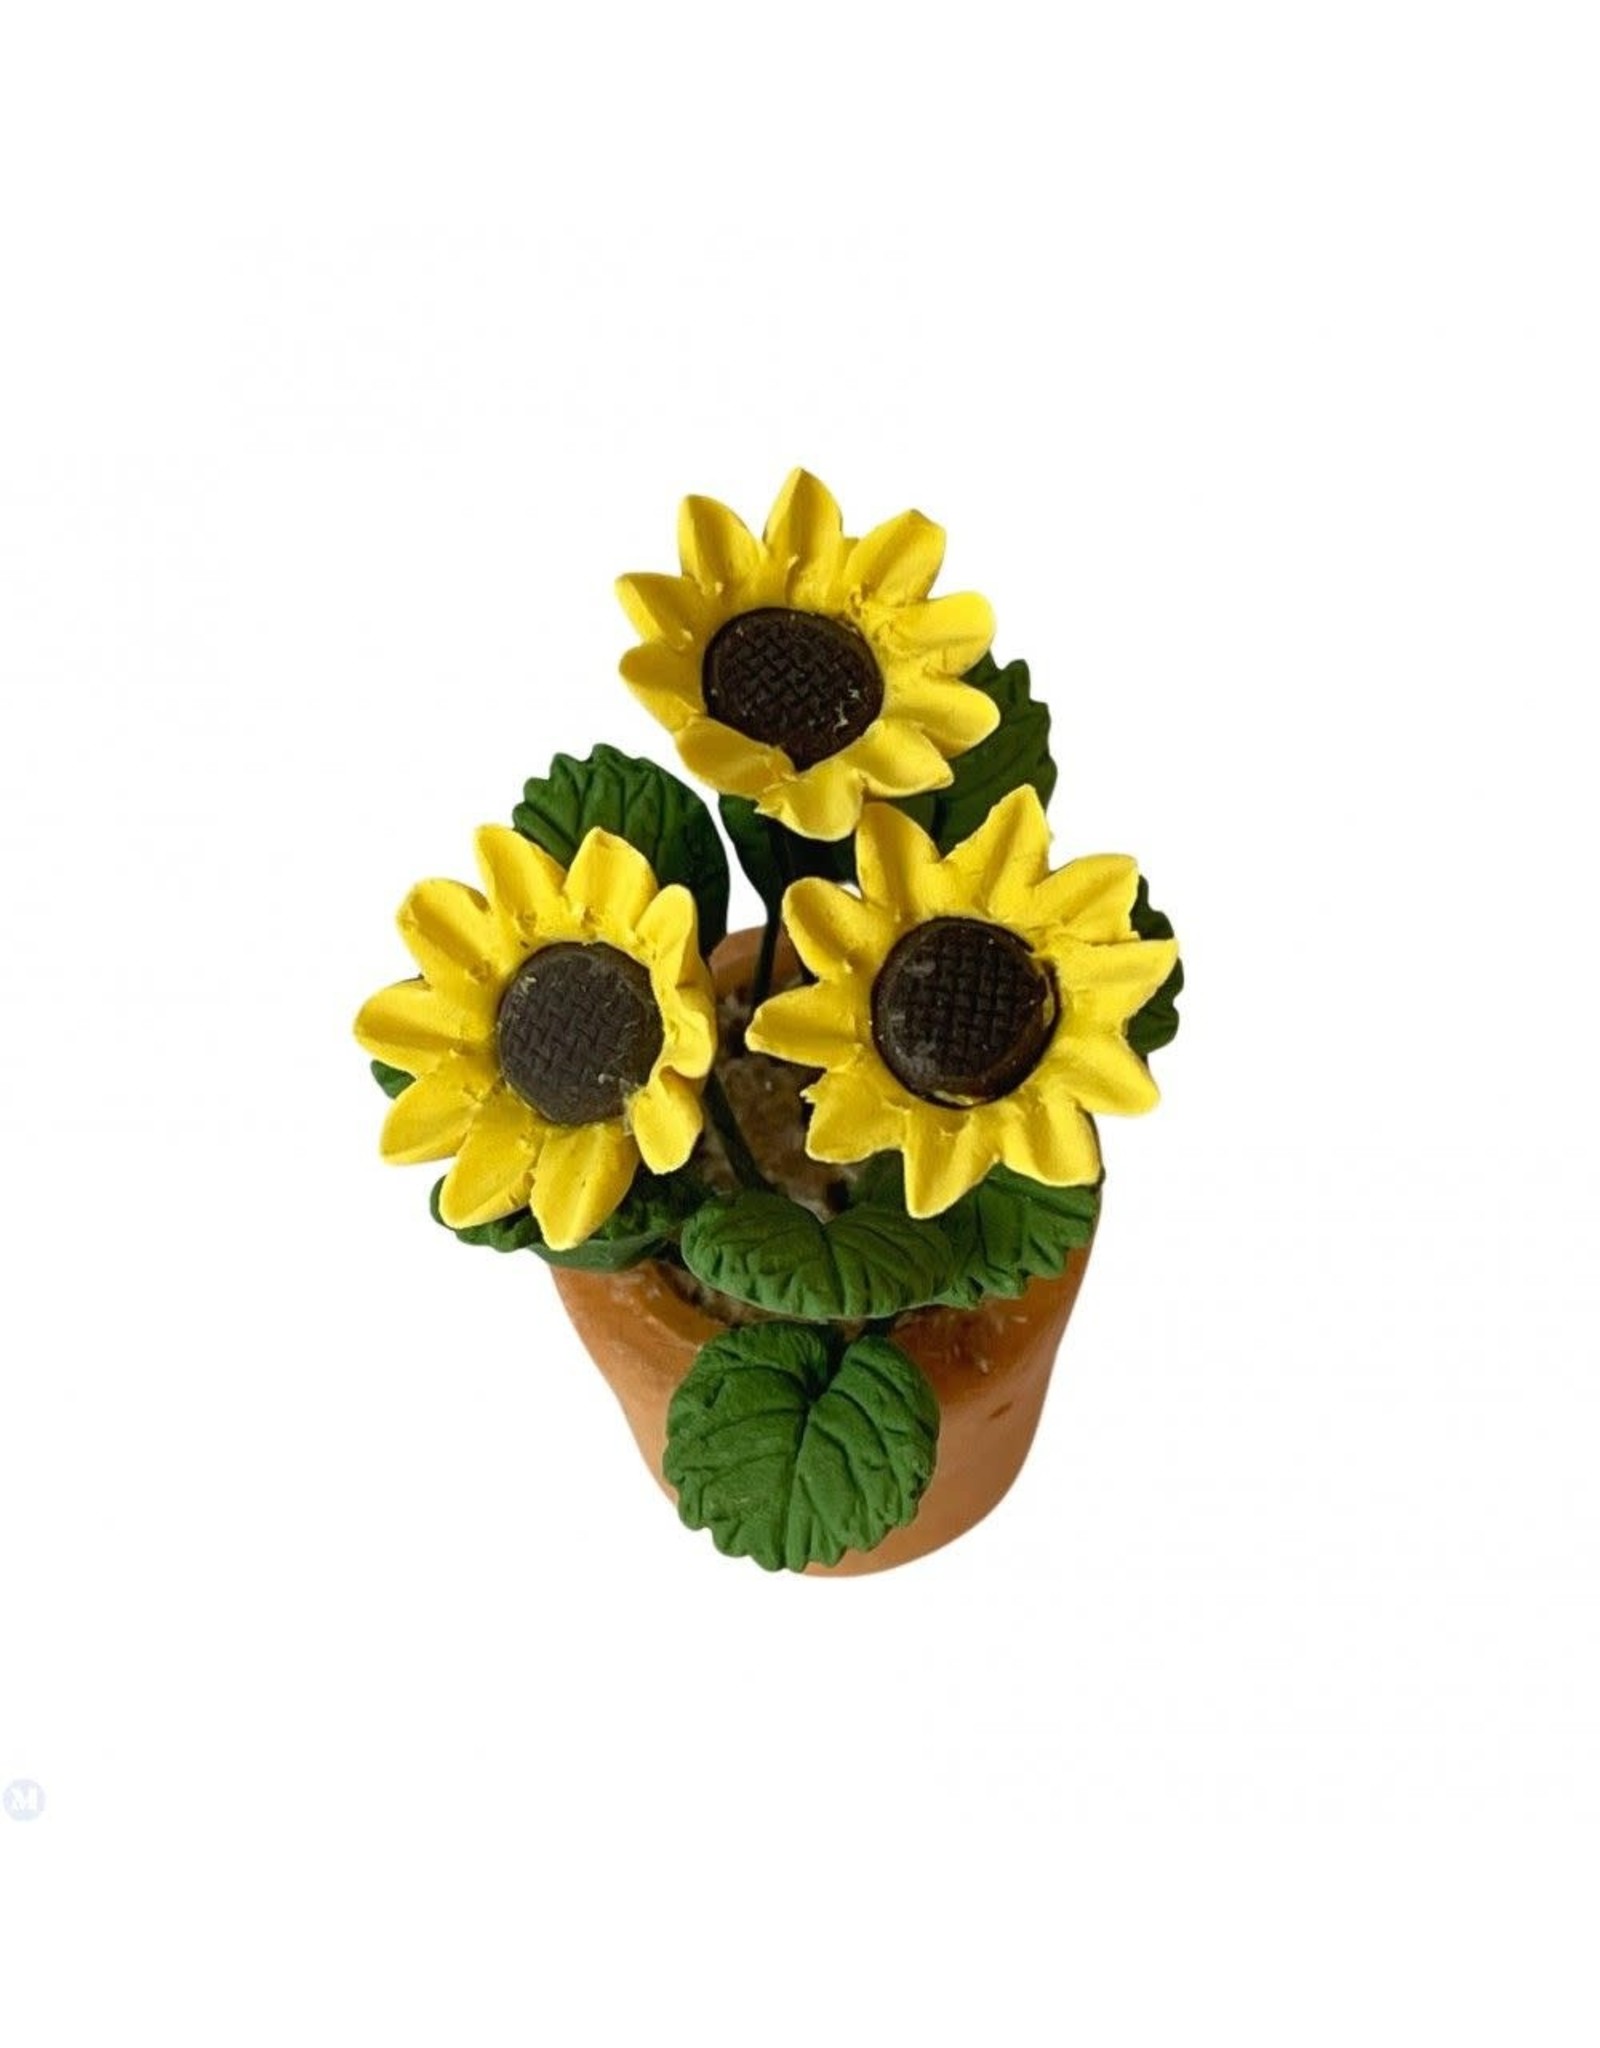 Pot de fleurs jaunes miniature 1:12